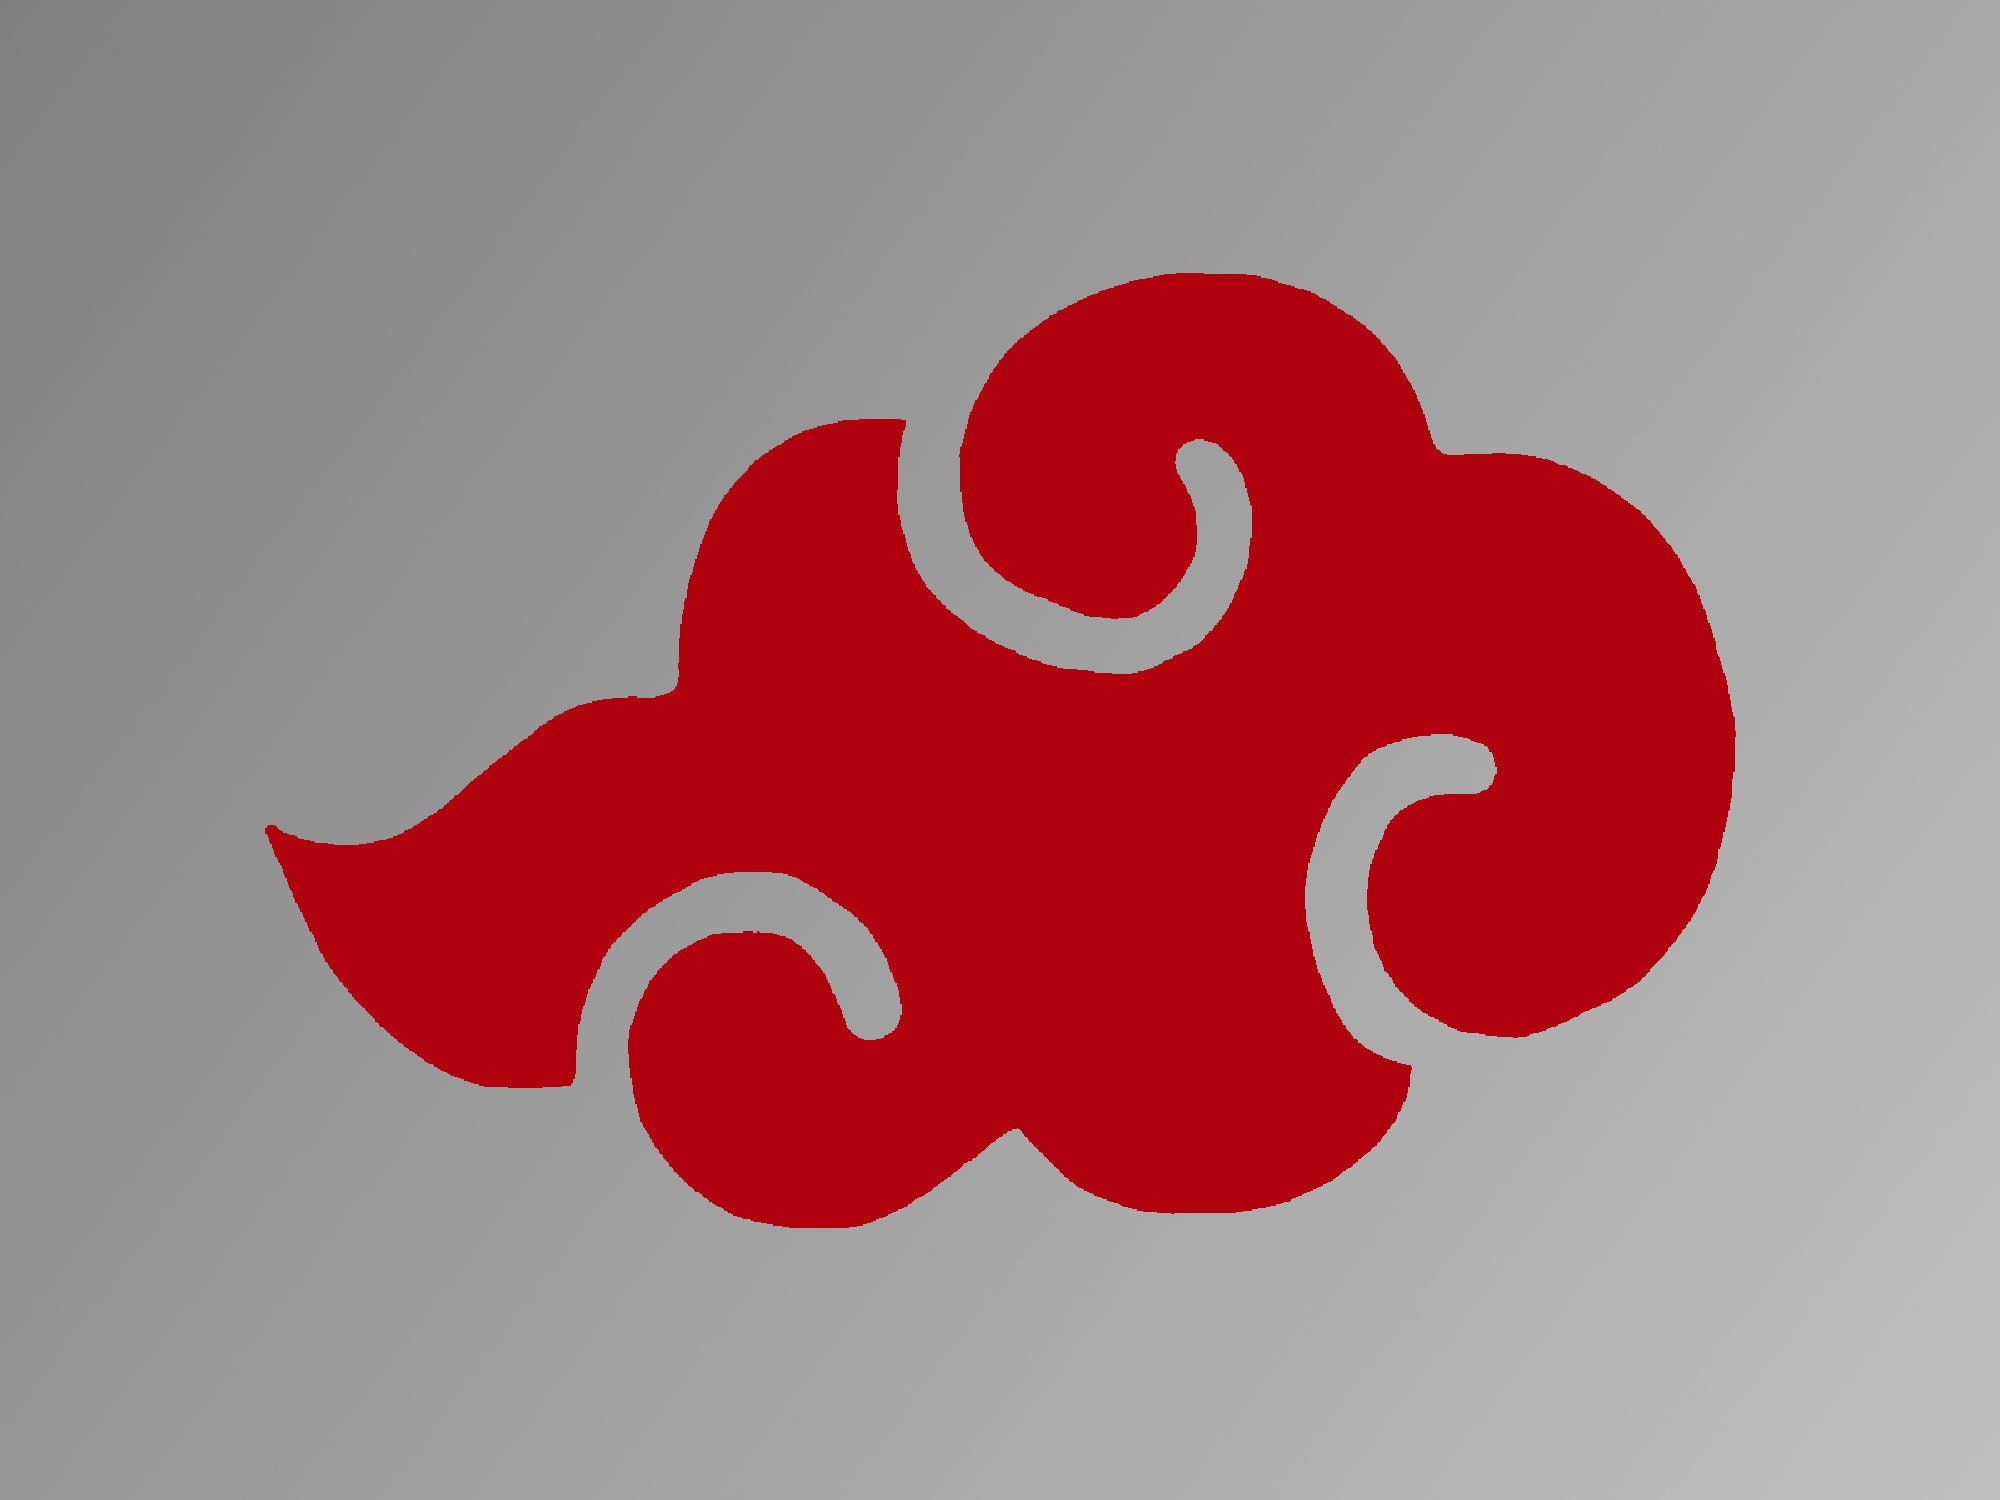 Akatsuki Cloud Vehicle Decal Sticker – LetterQuote  Легкие рисунки, Эскиз,  Милые рисунки